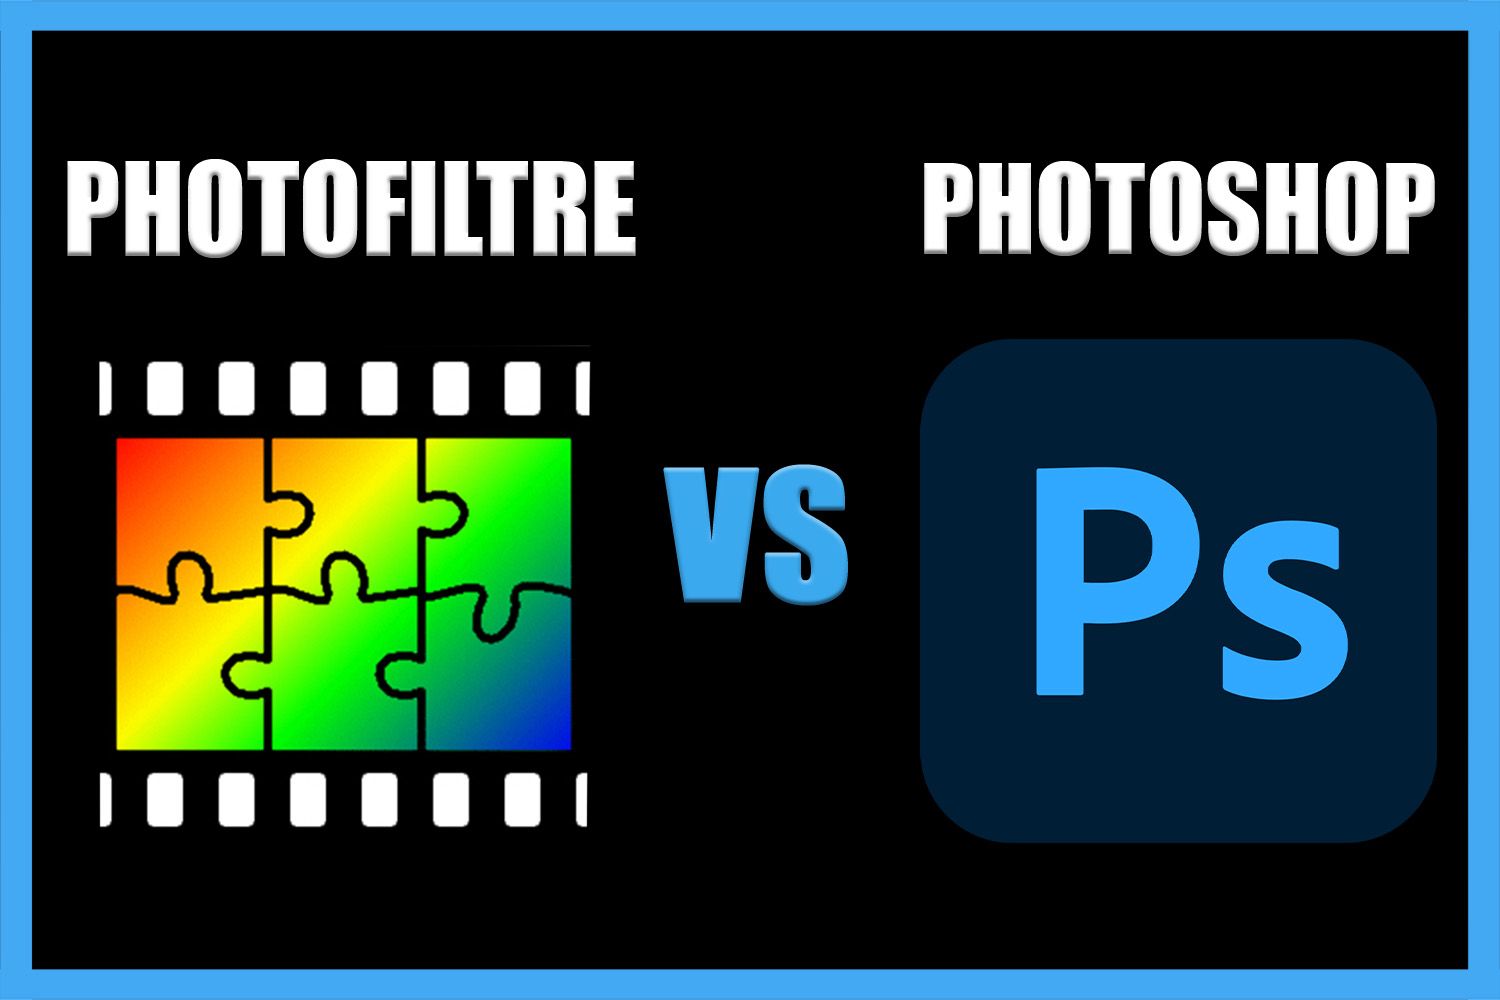 Photofiltre or Photoshop